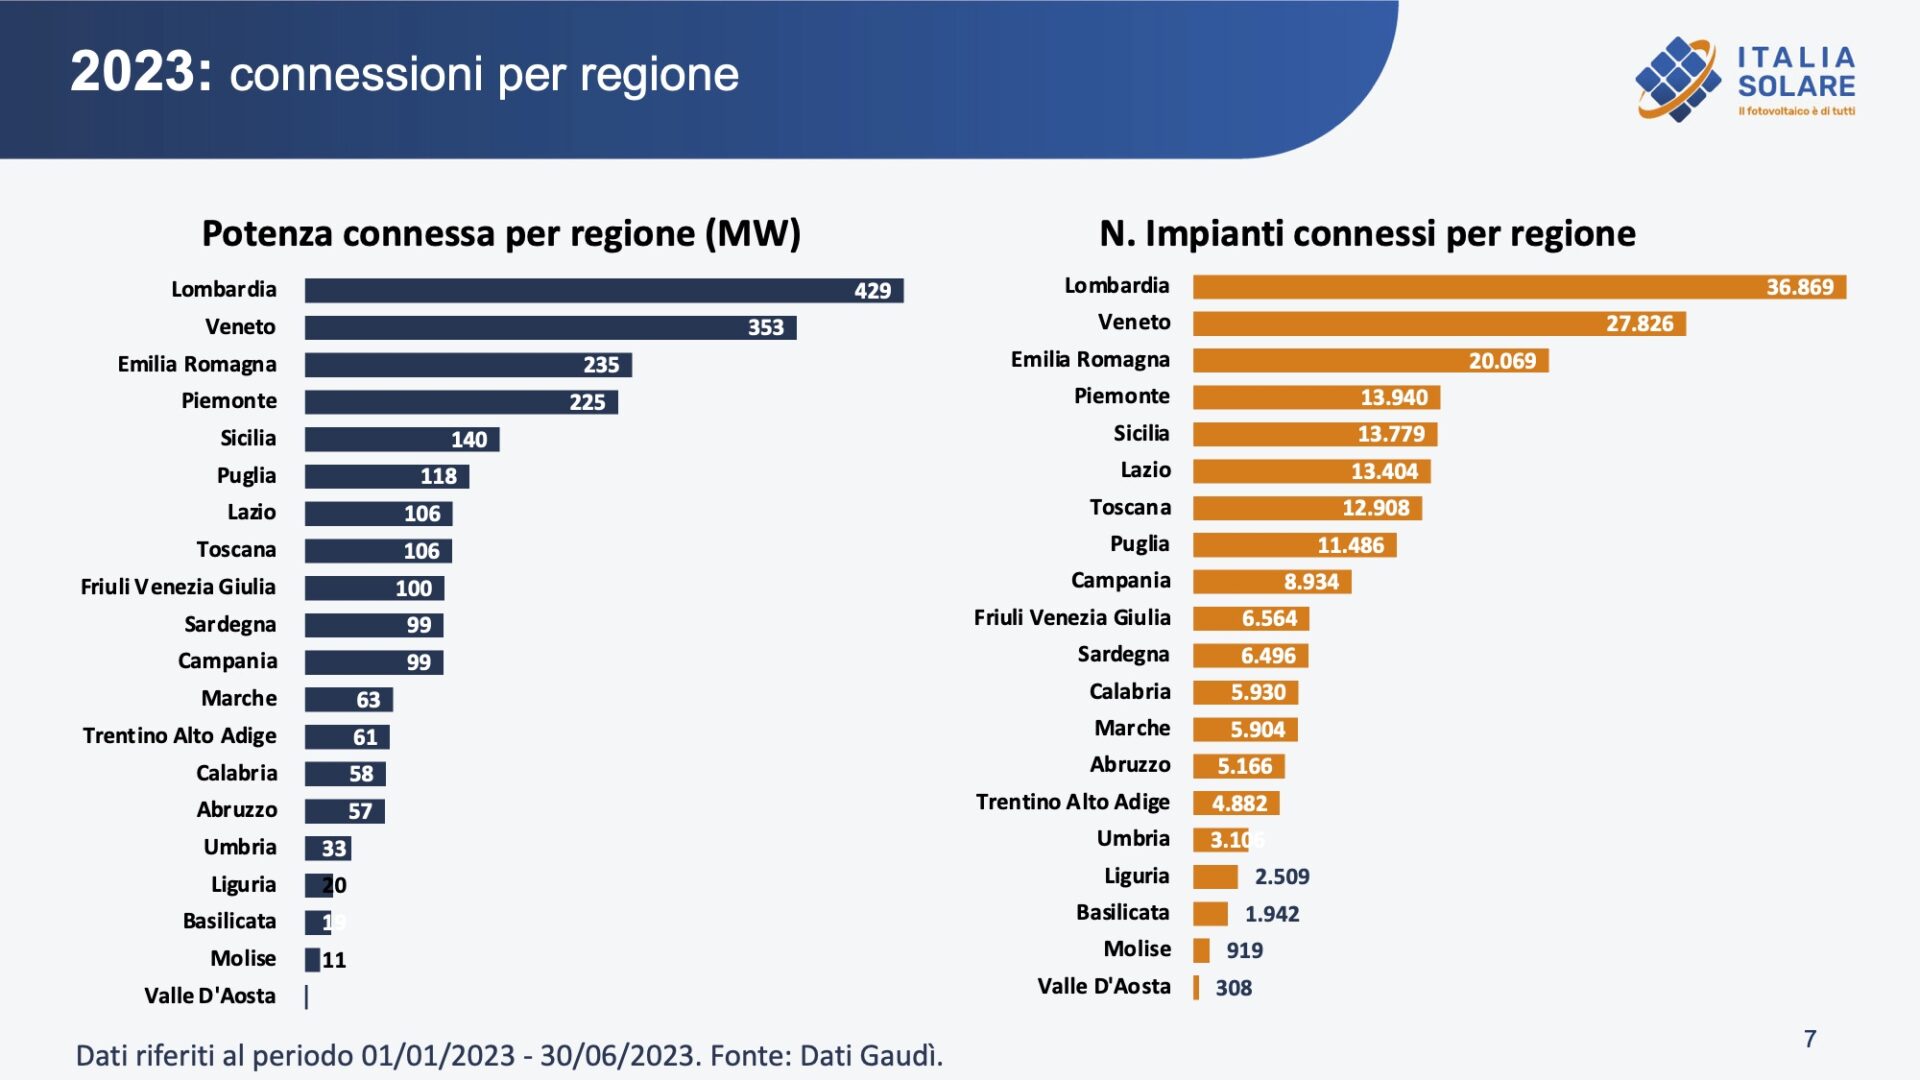 Fotovoltaico in Italia, report Italia Solare